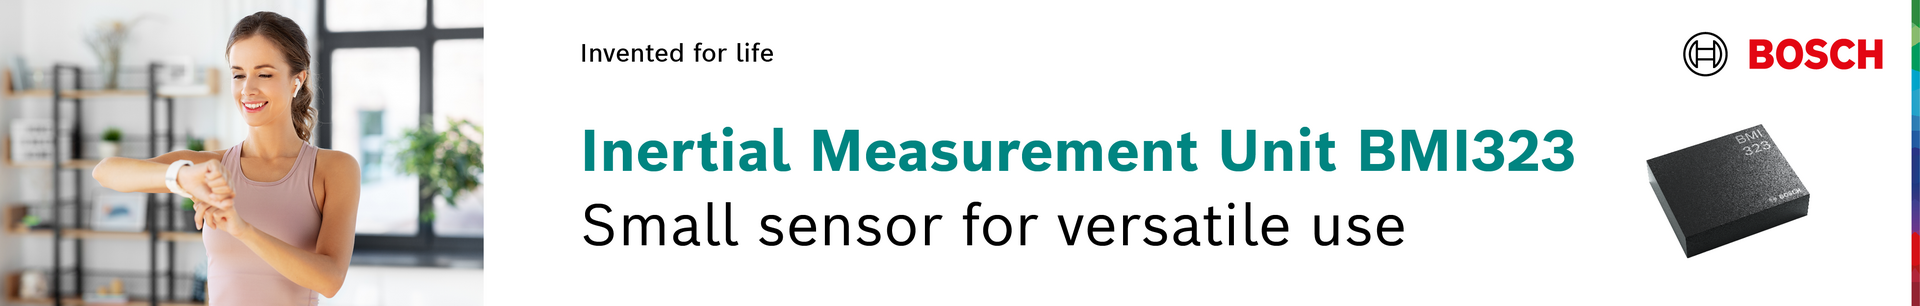 Bosch Inertial Measurement Unit BMI323